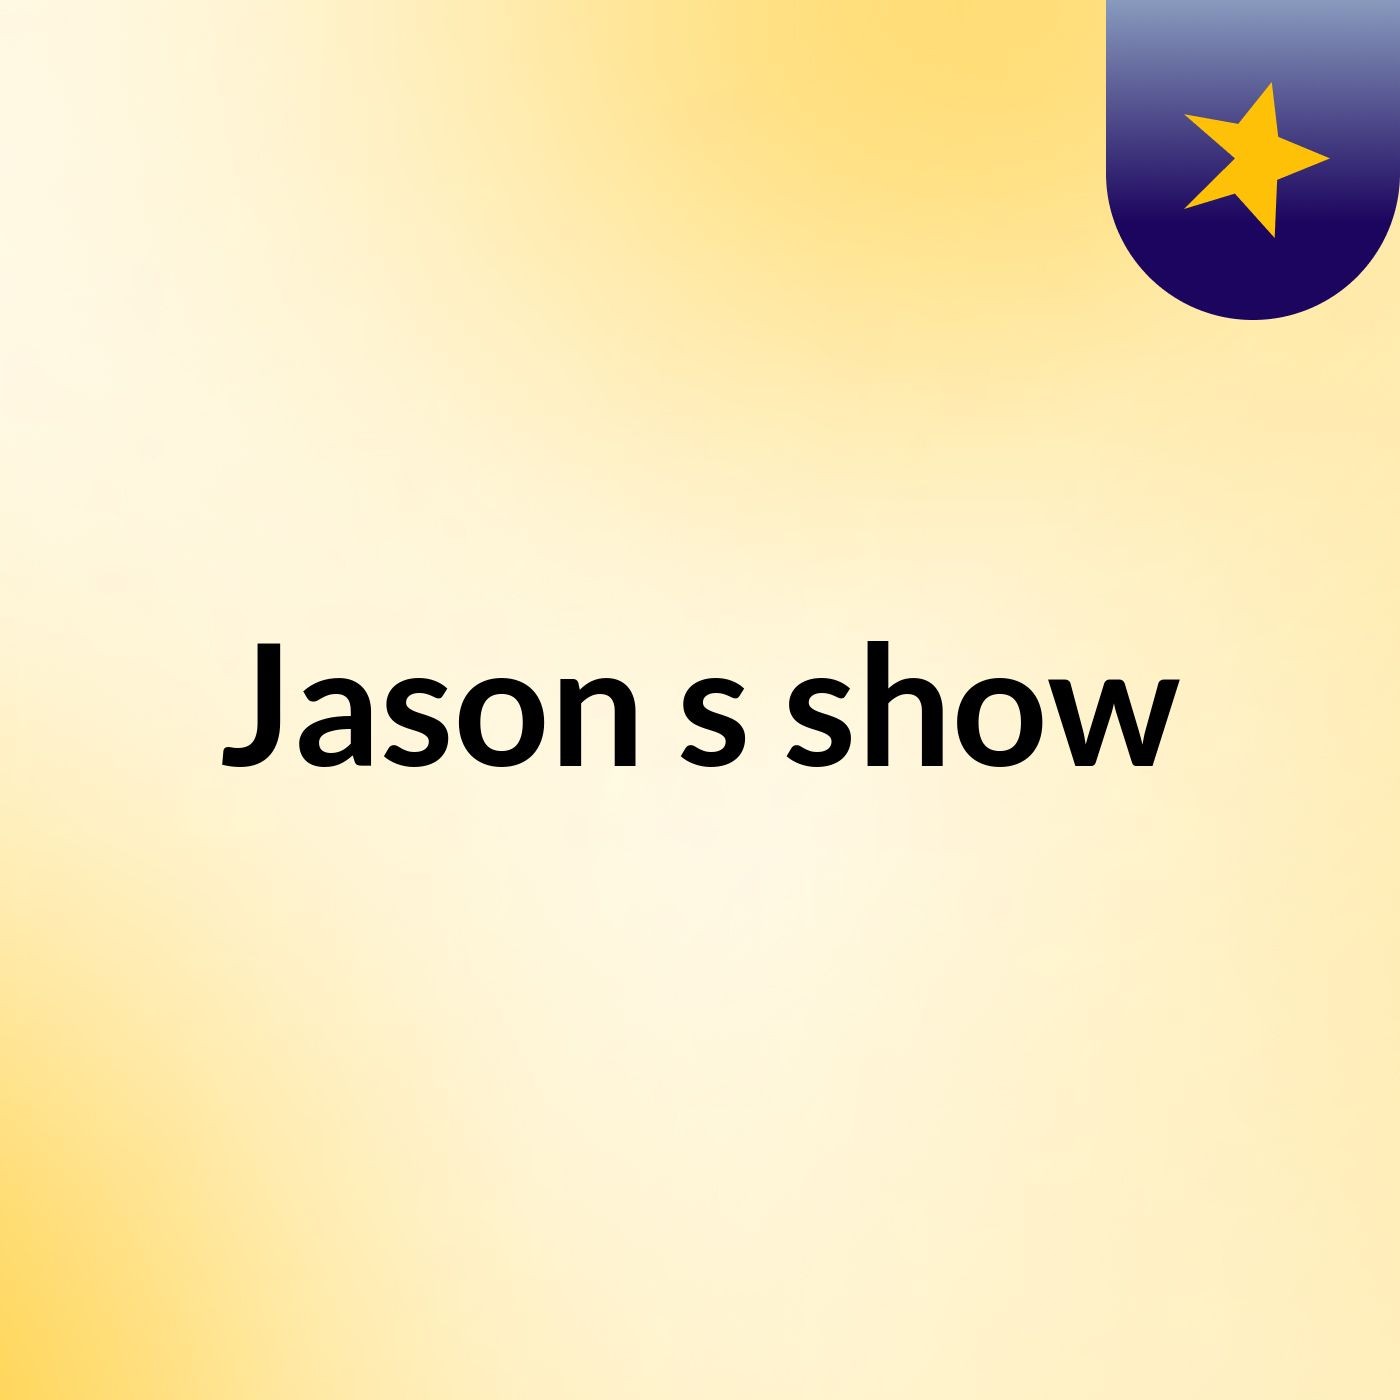 Jason's show